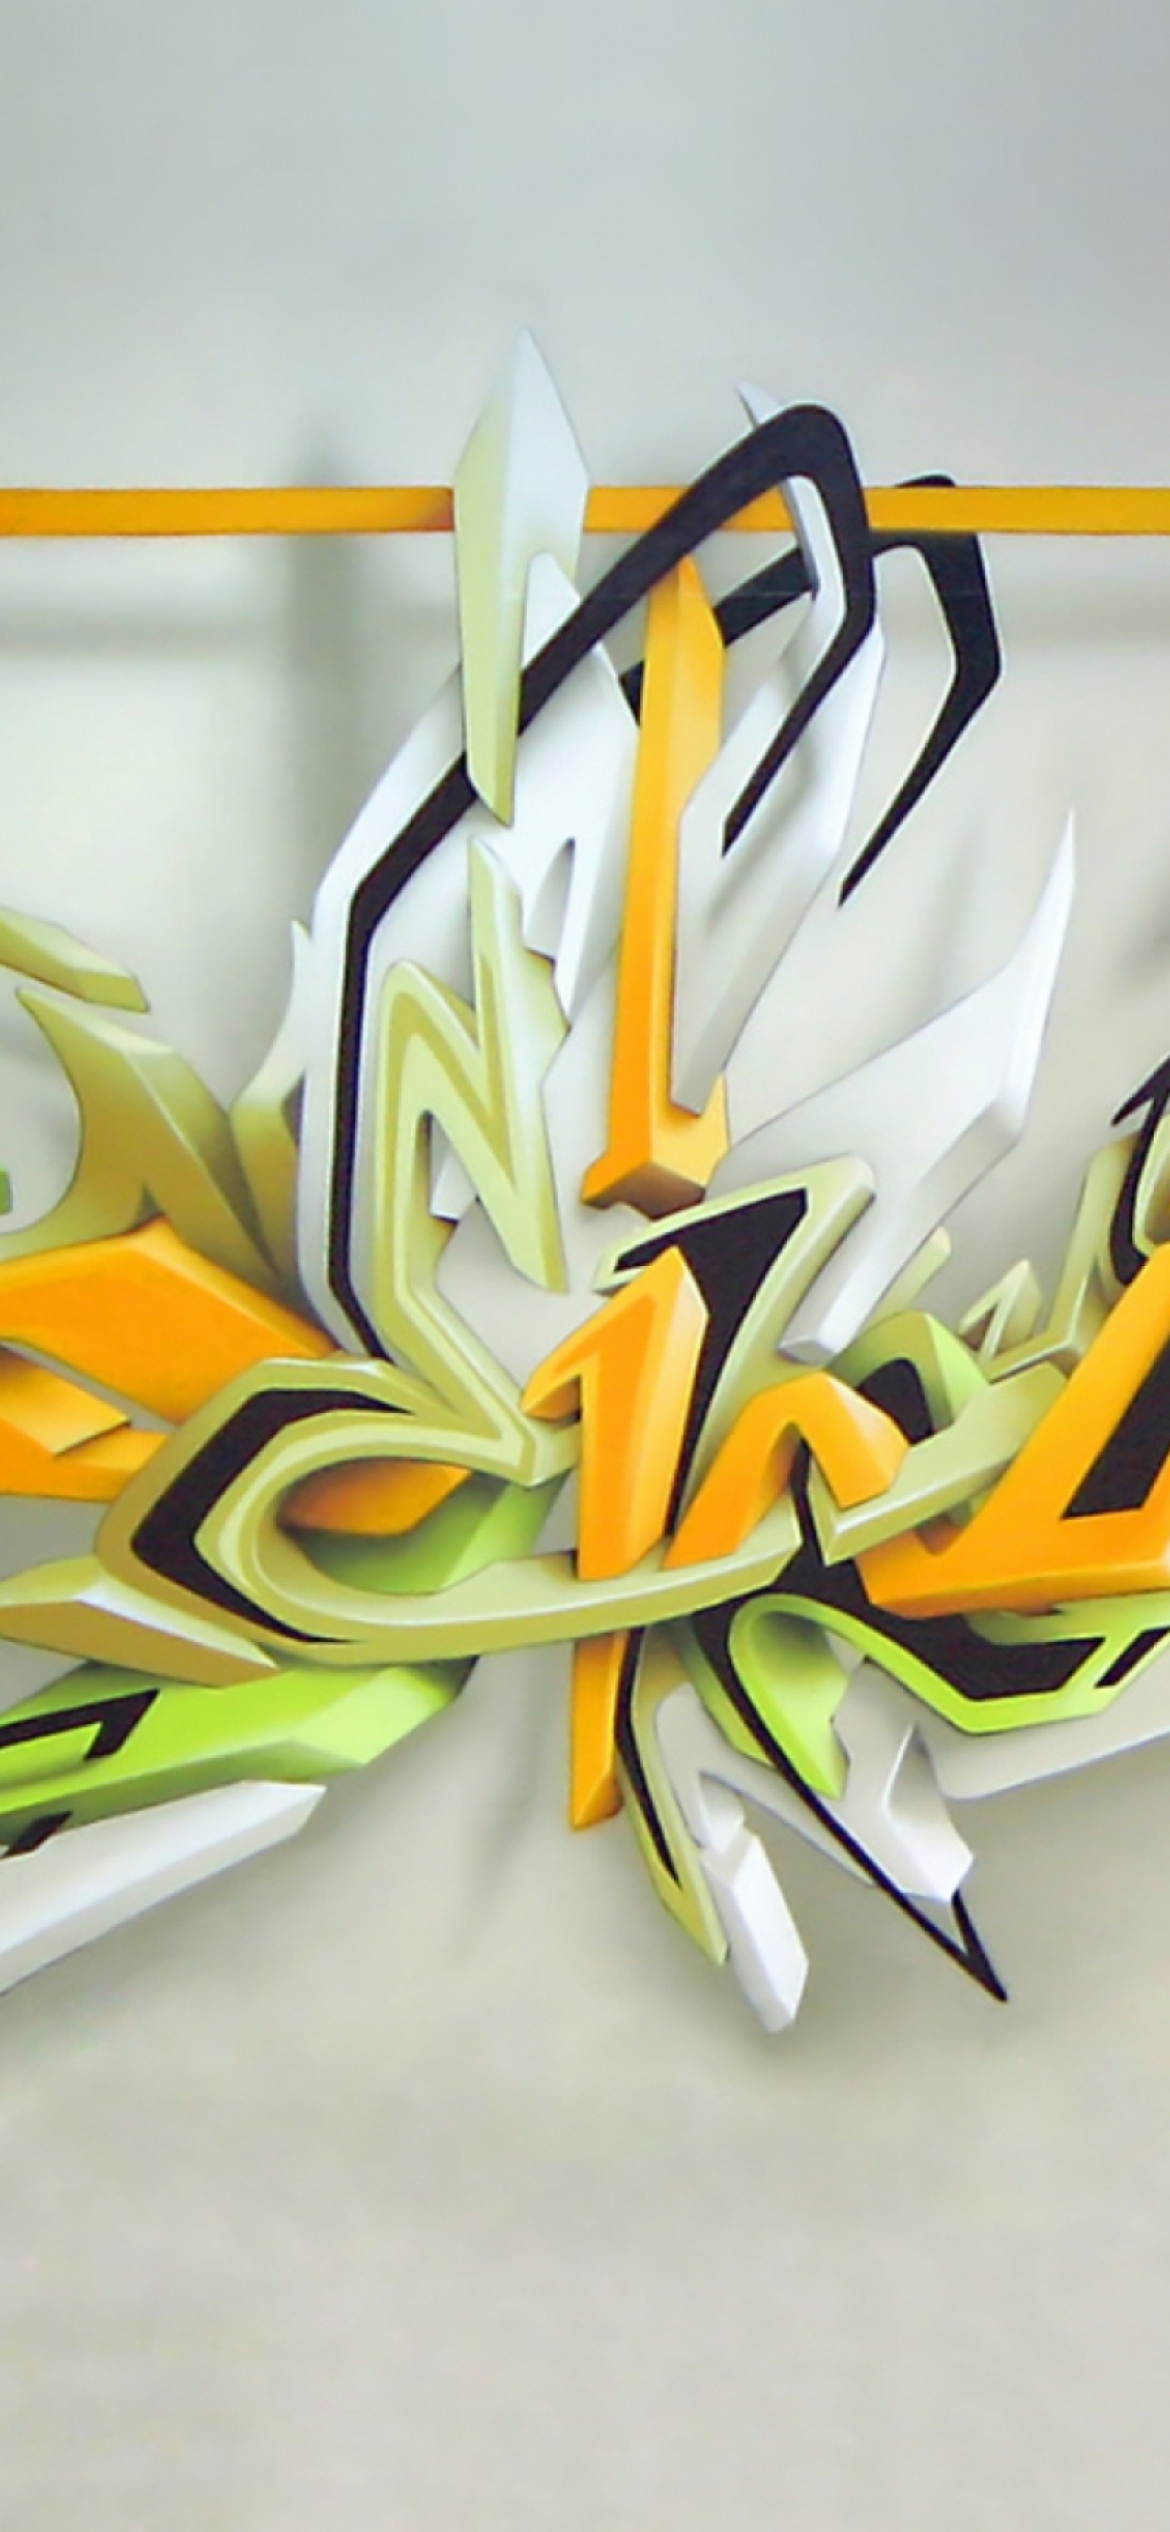 Graffiti: Daim 3D wallpaper 1170x2532